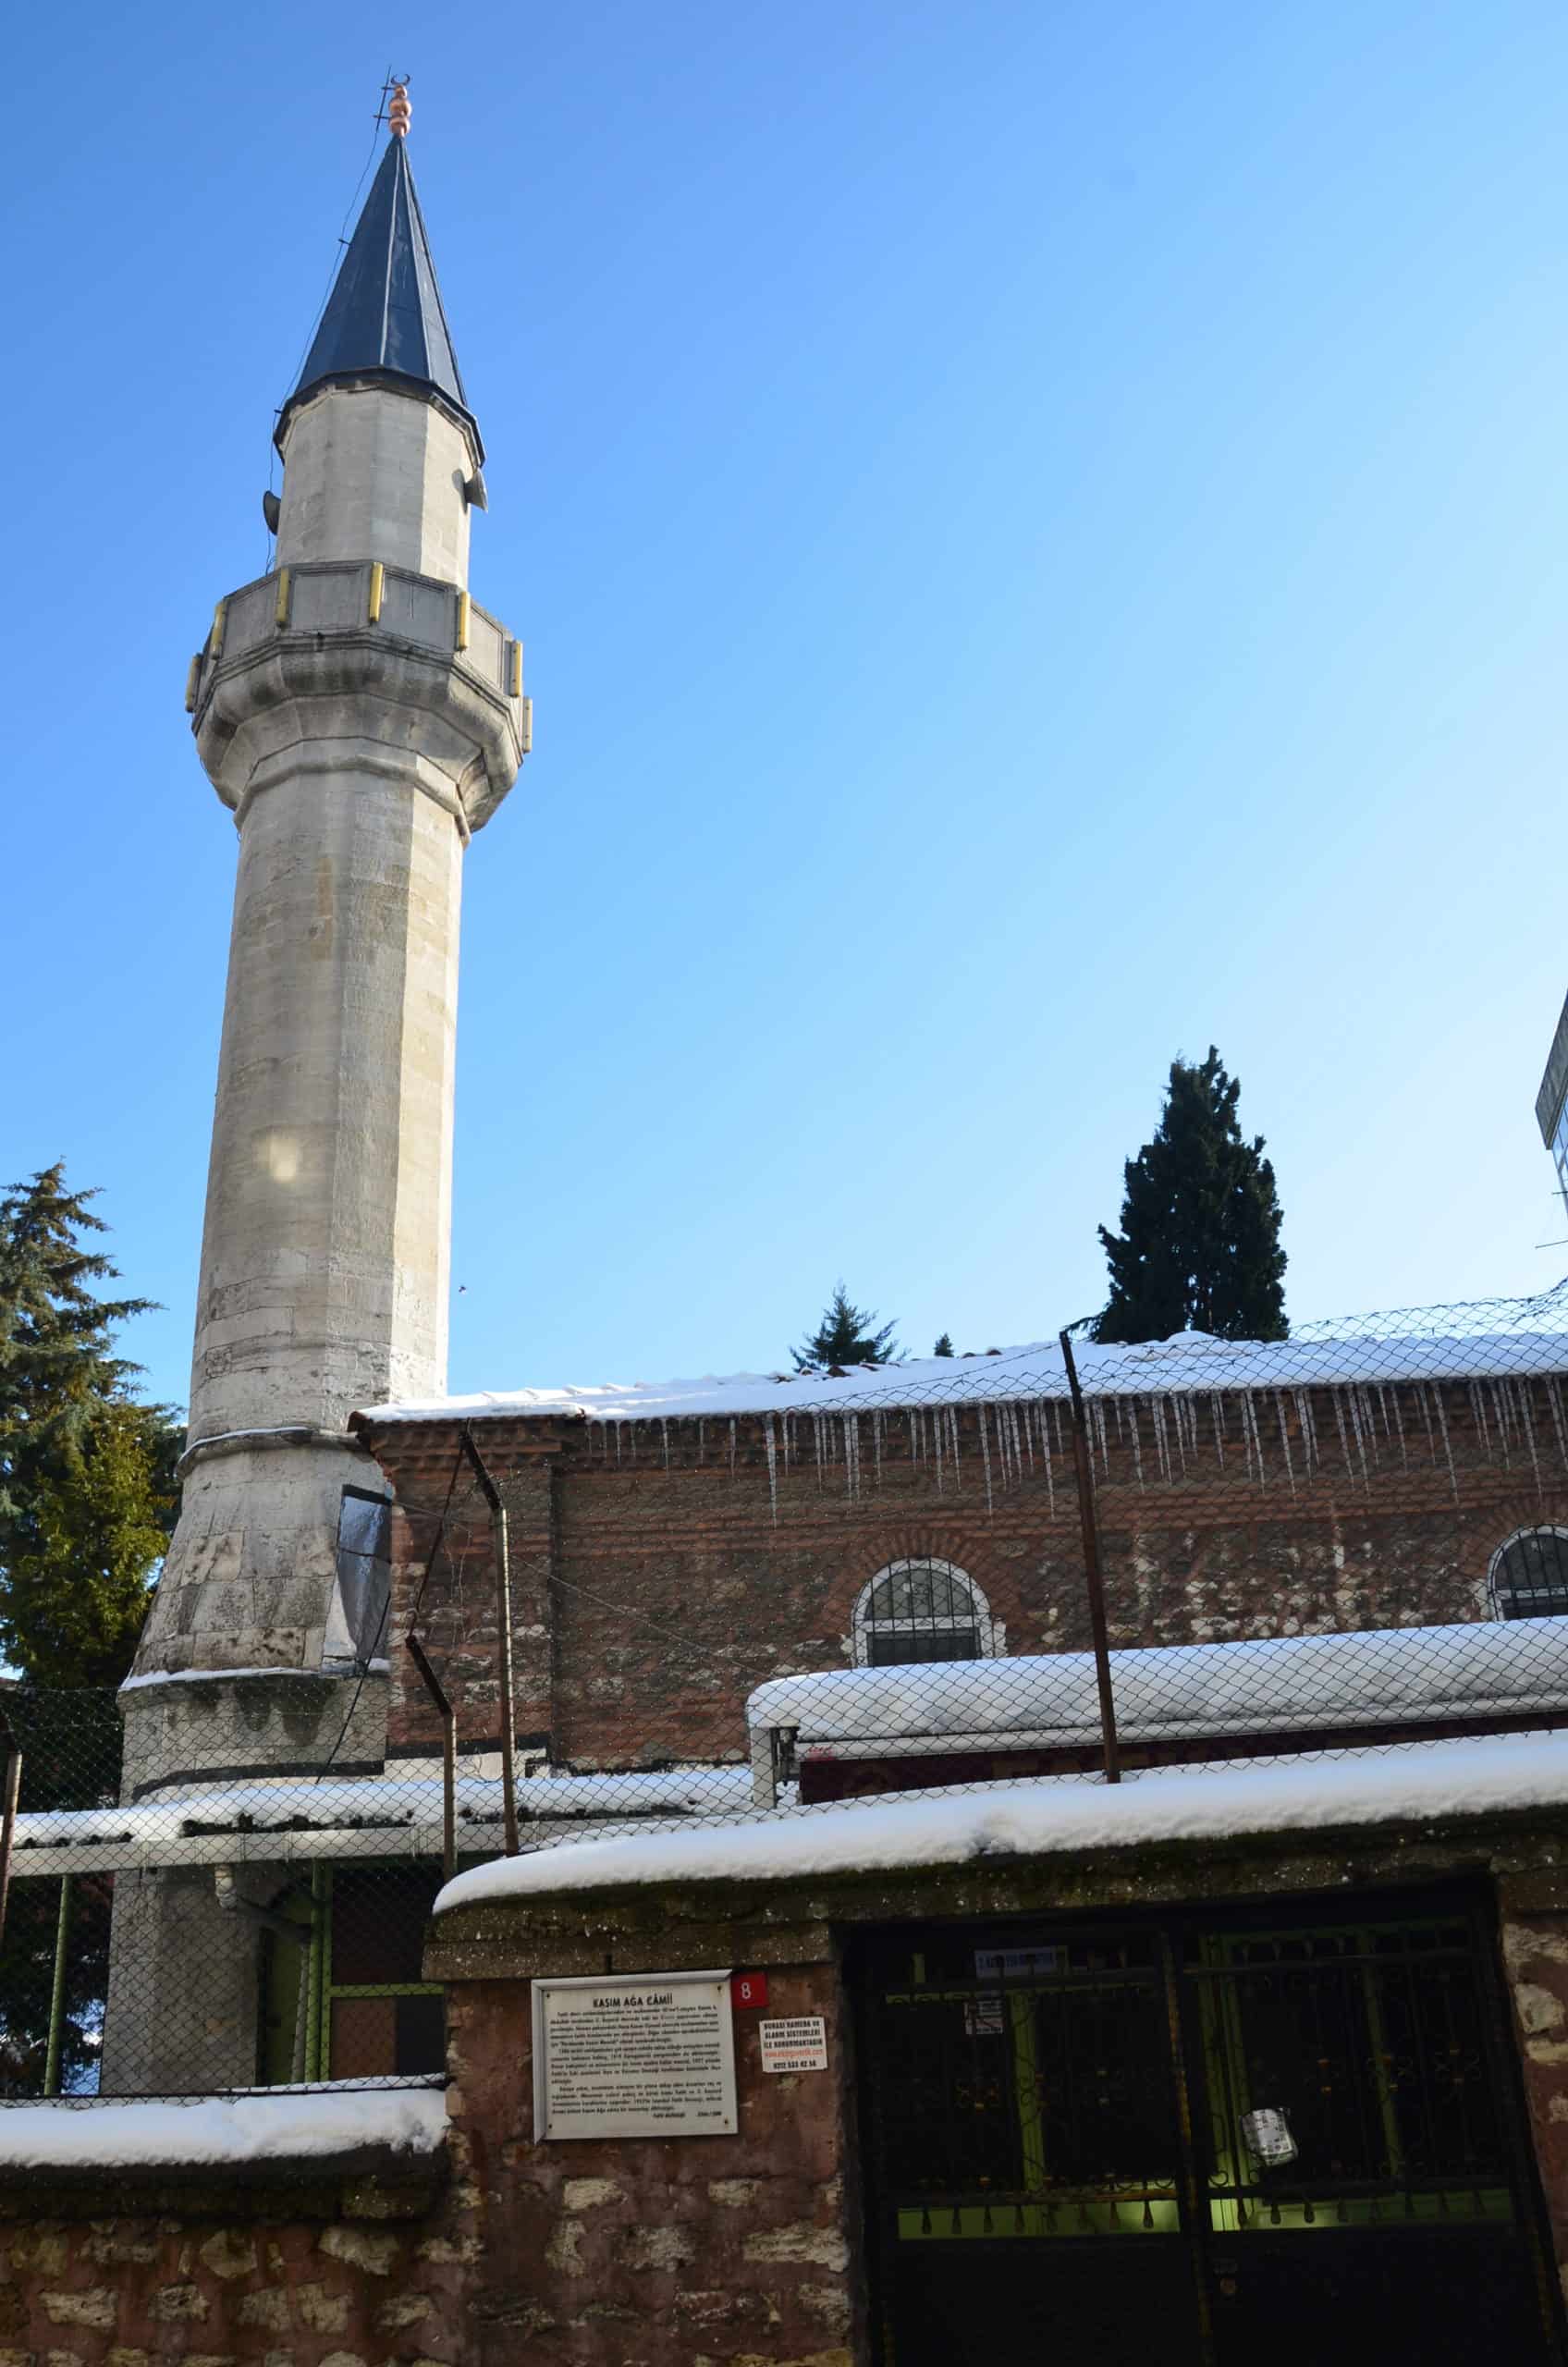 Kasım Ağa Mosque in Fatih, Istanbul, Turkey